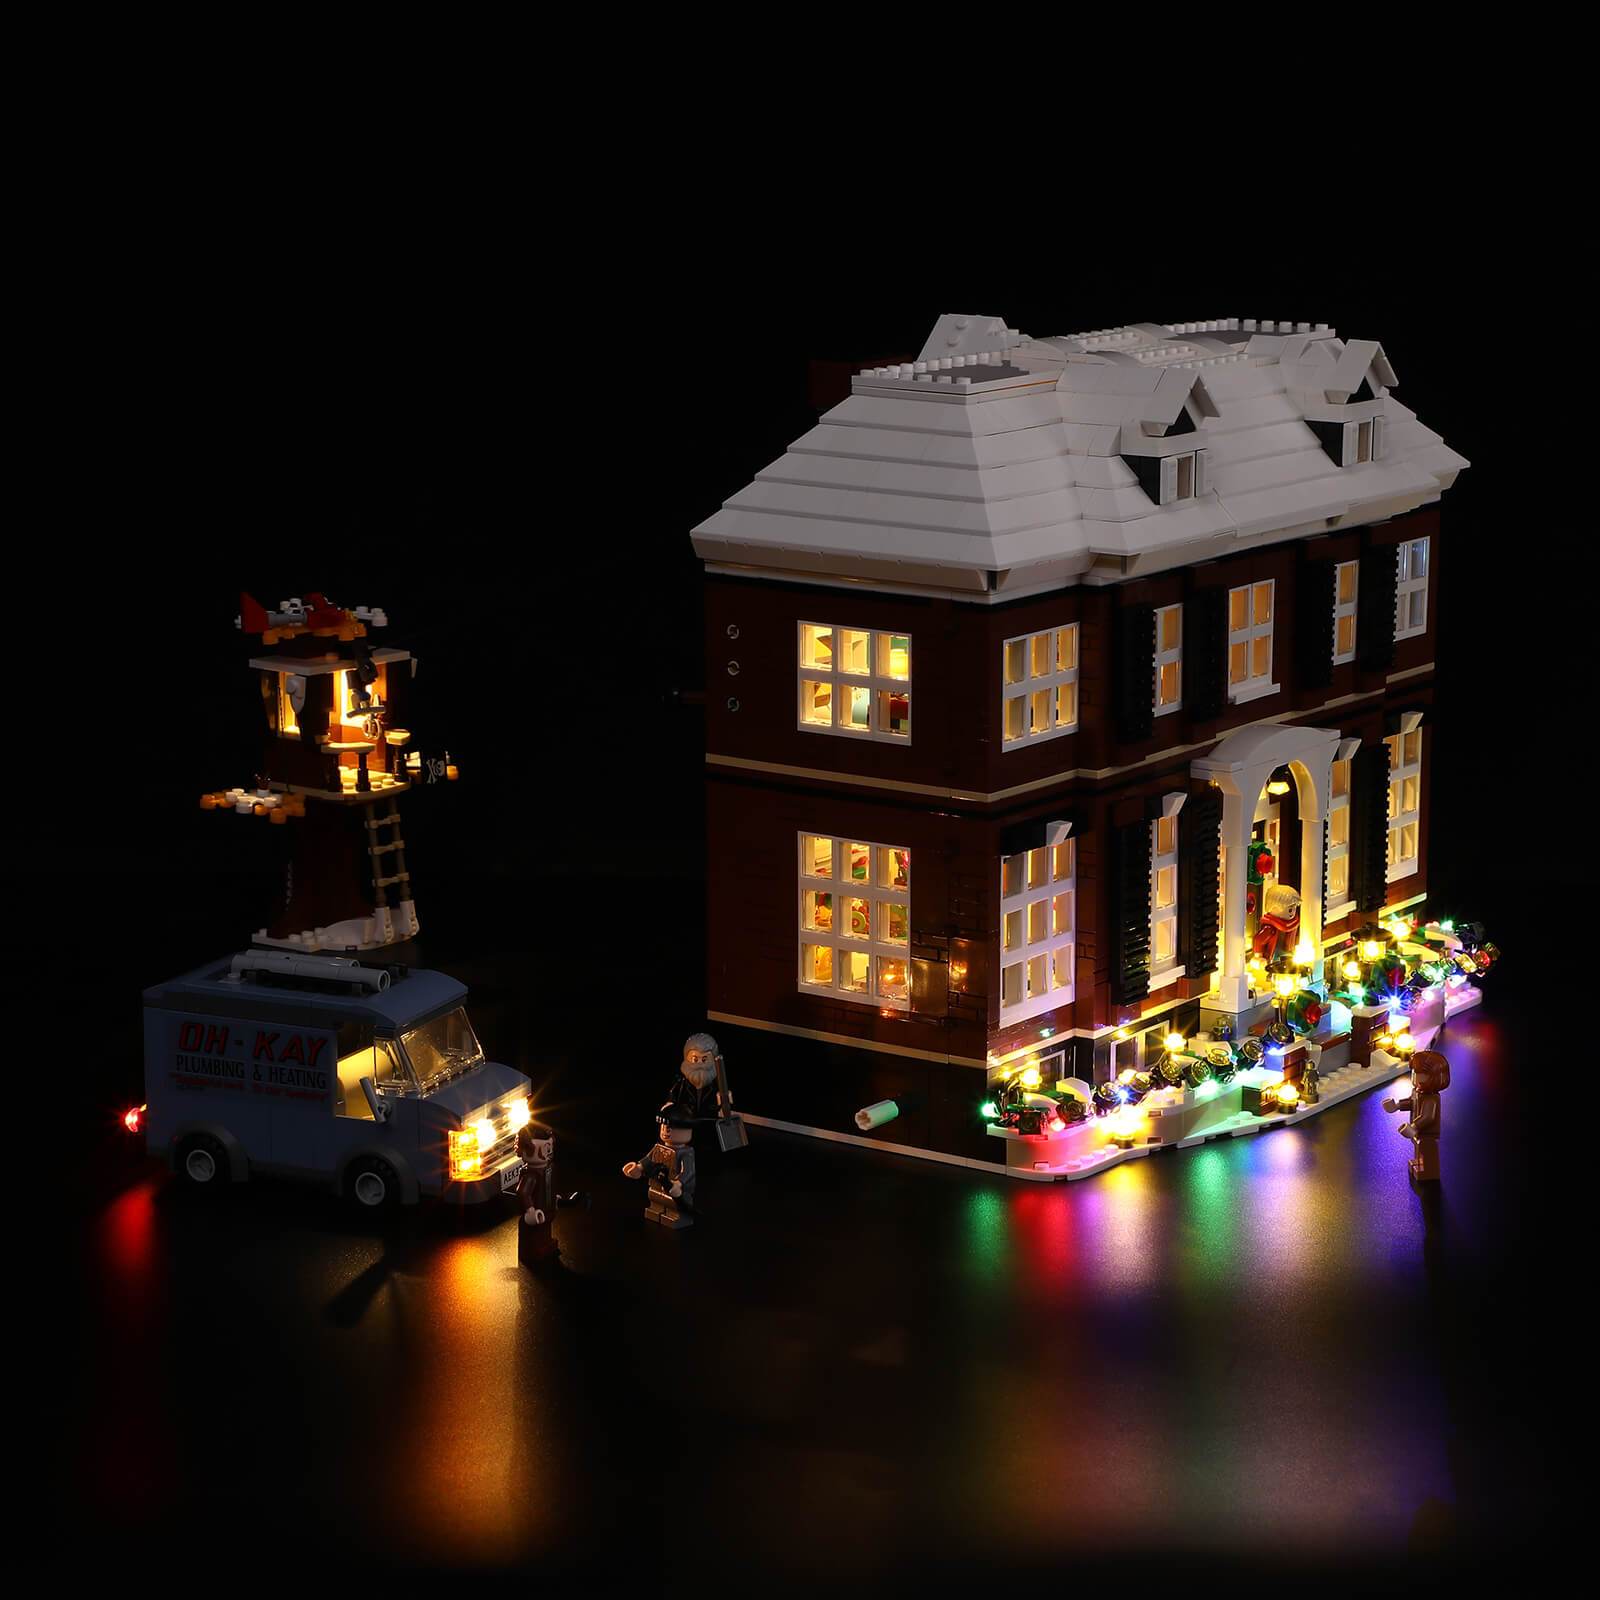 lego ideas home alone set with warm light